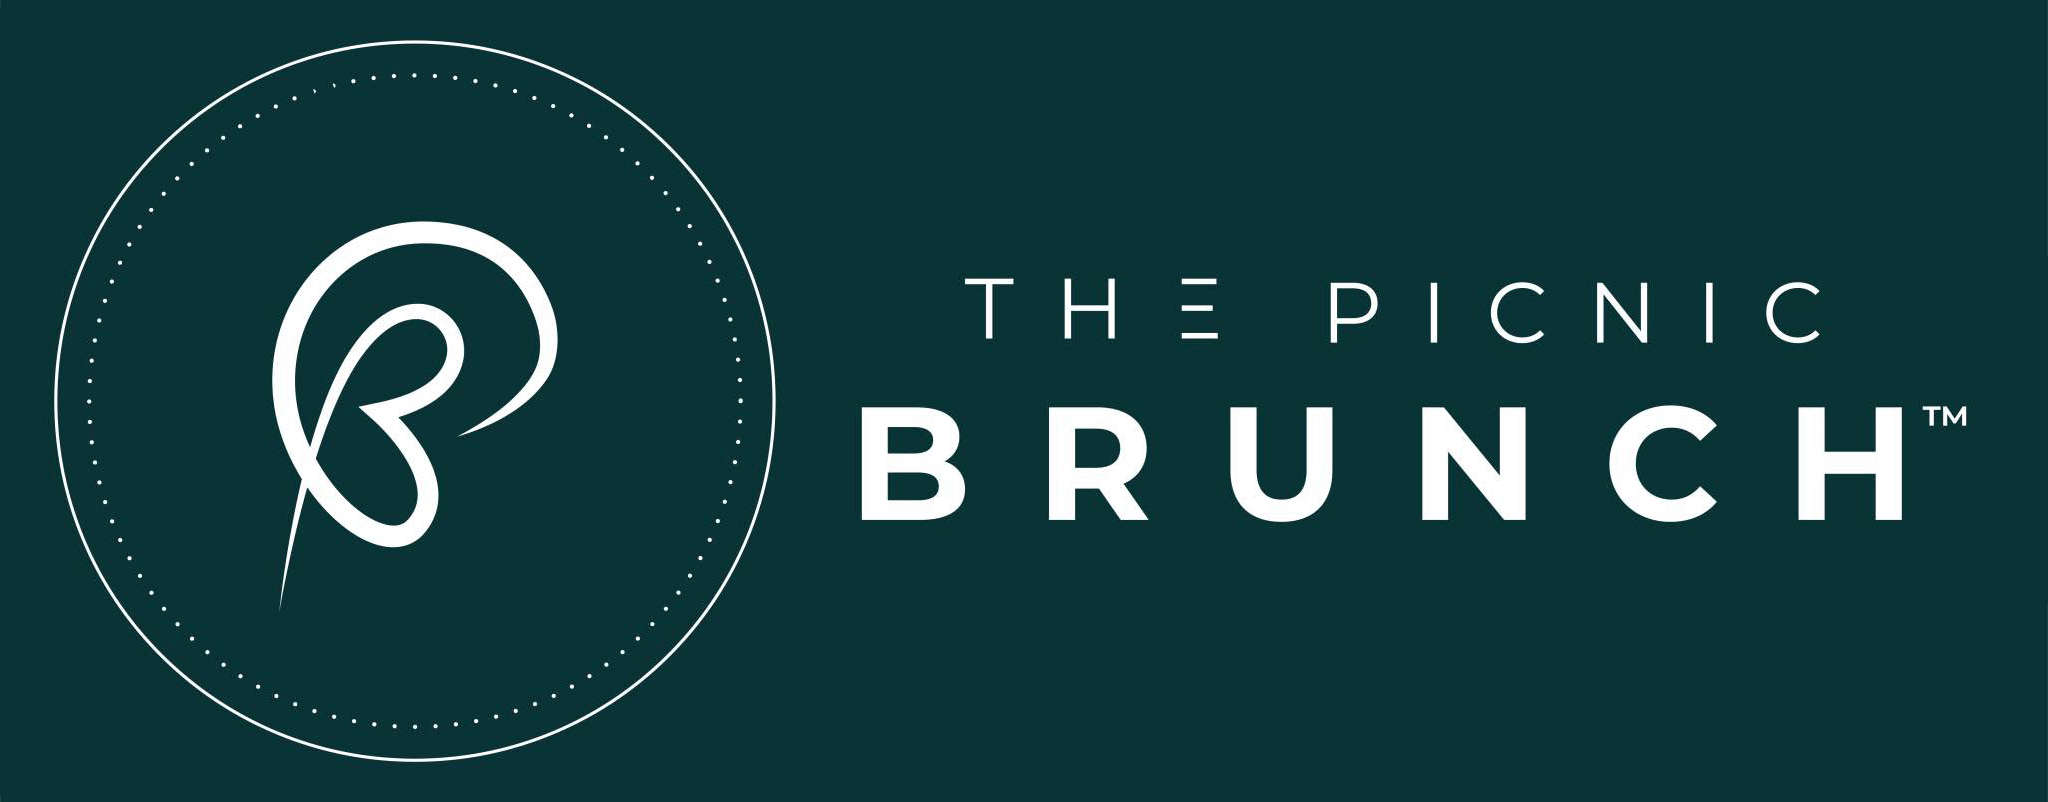 The Picnic Brunch – Your New Favorite Brunch Spot